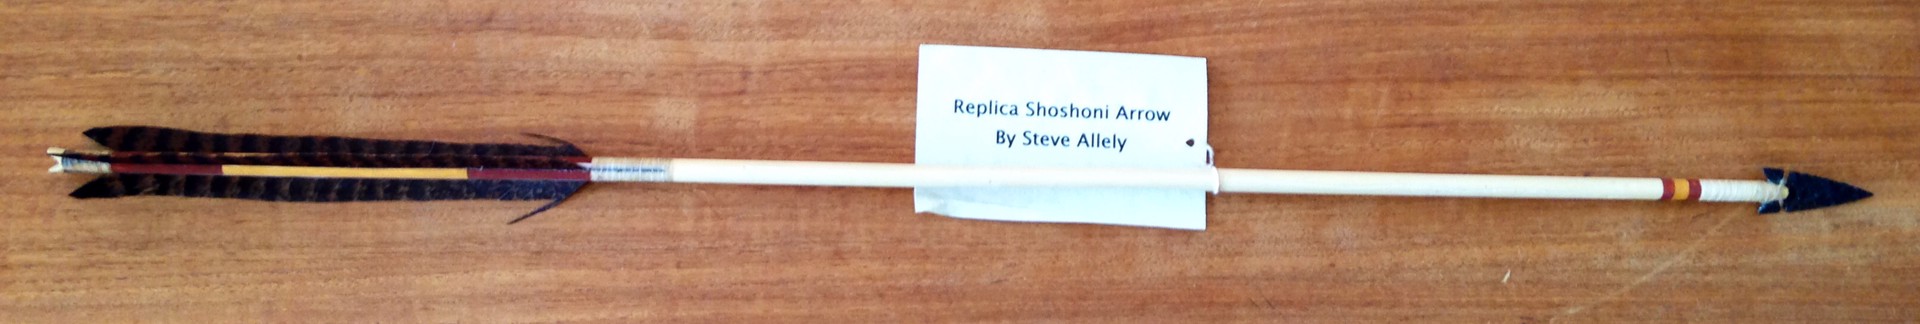 Replica Shoshoni Arrow by Steve Allely